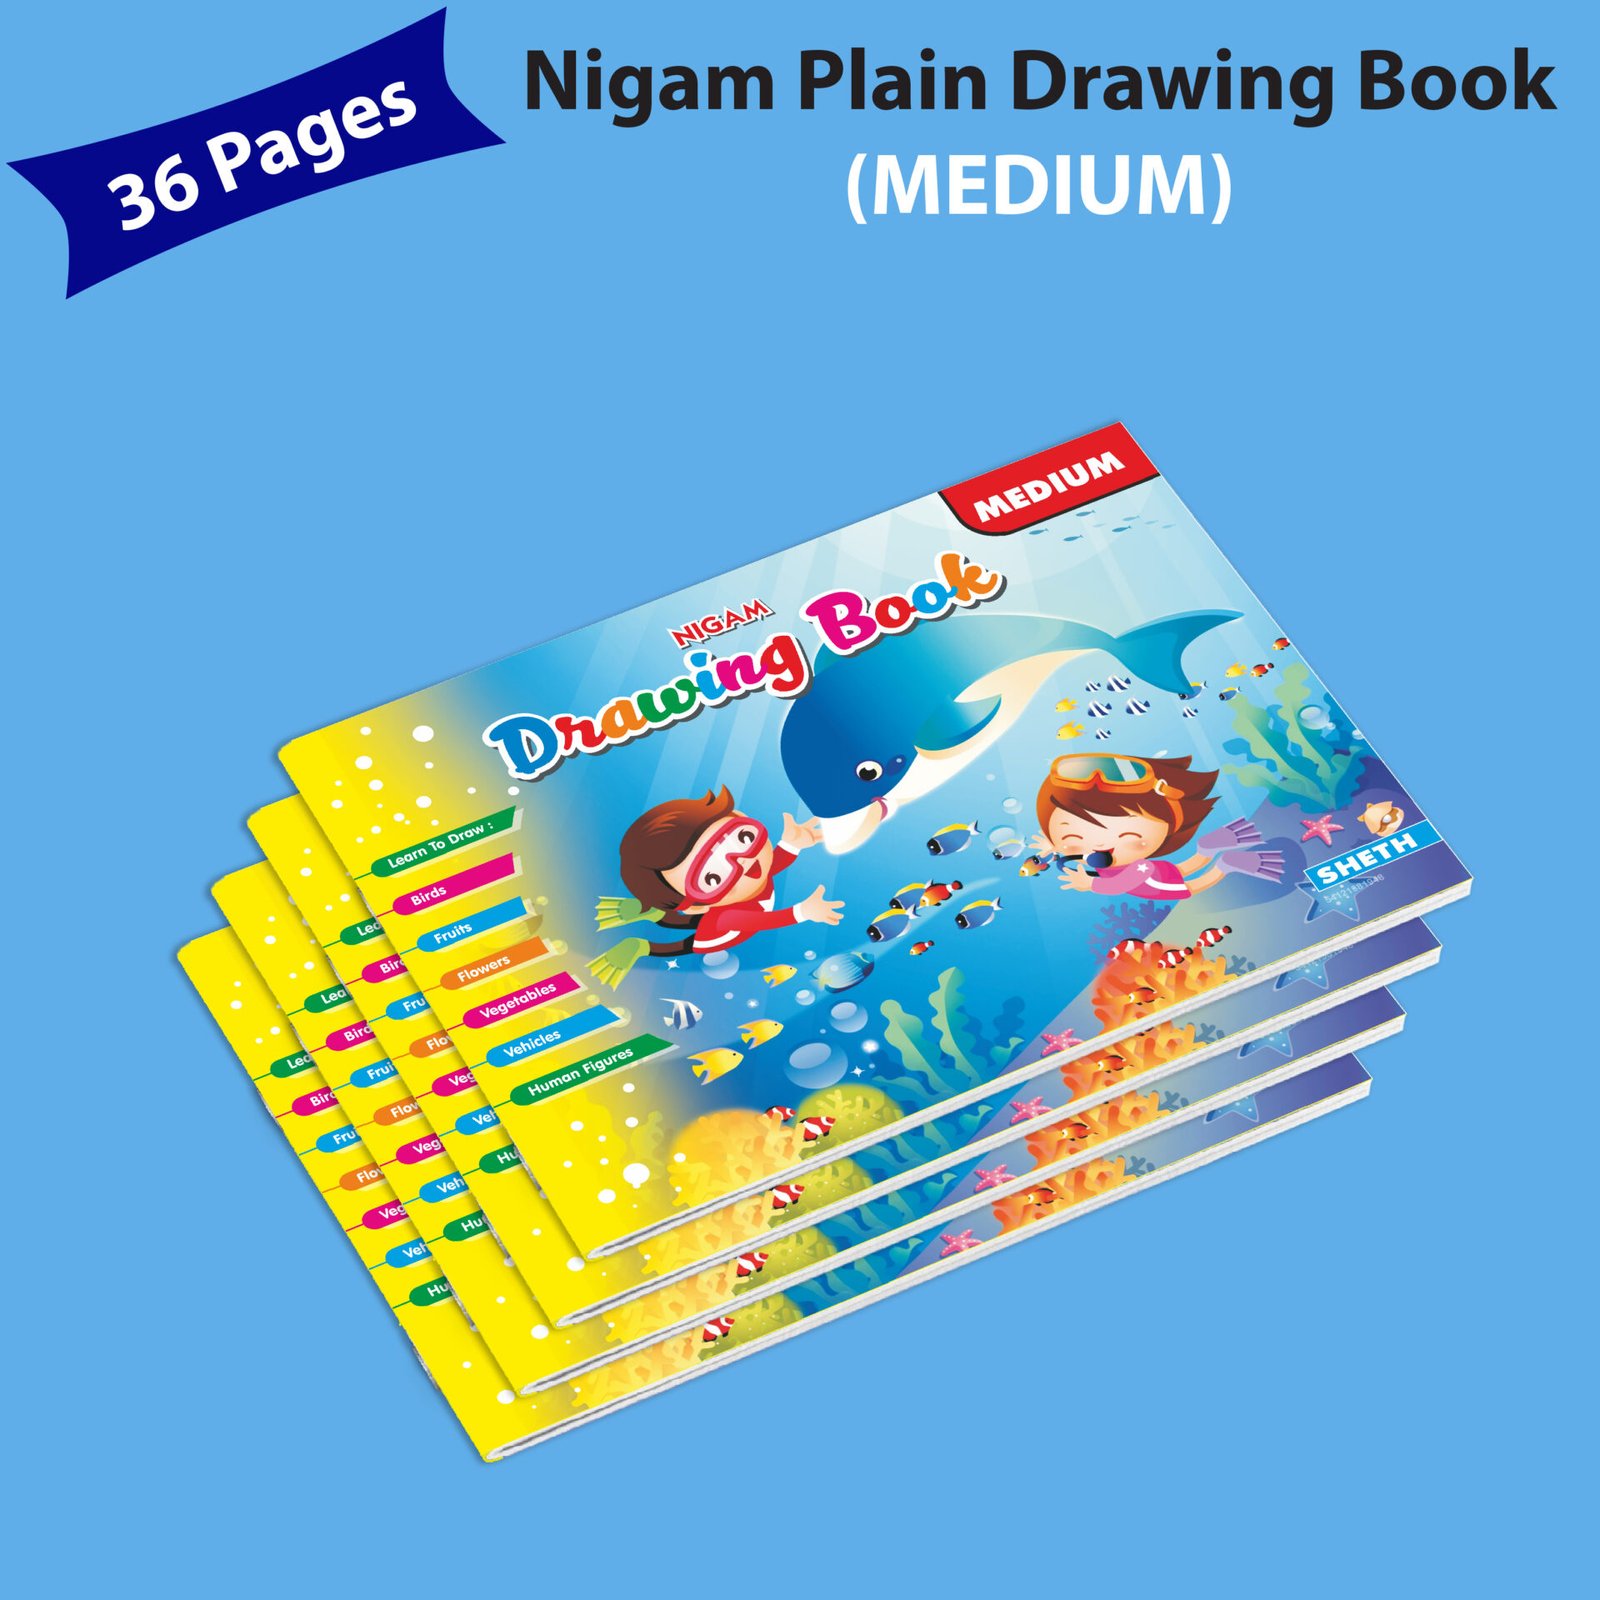 Nigam Plain Drawing Book Medium Shethbooks Official Buy Page Of Sheth Publishing House